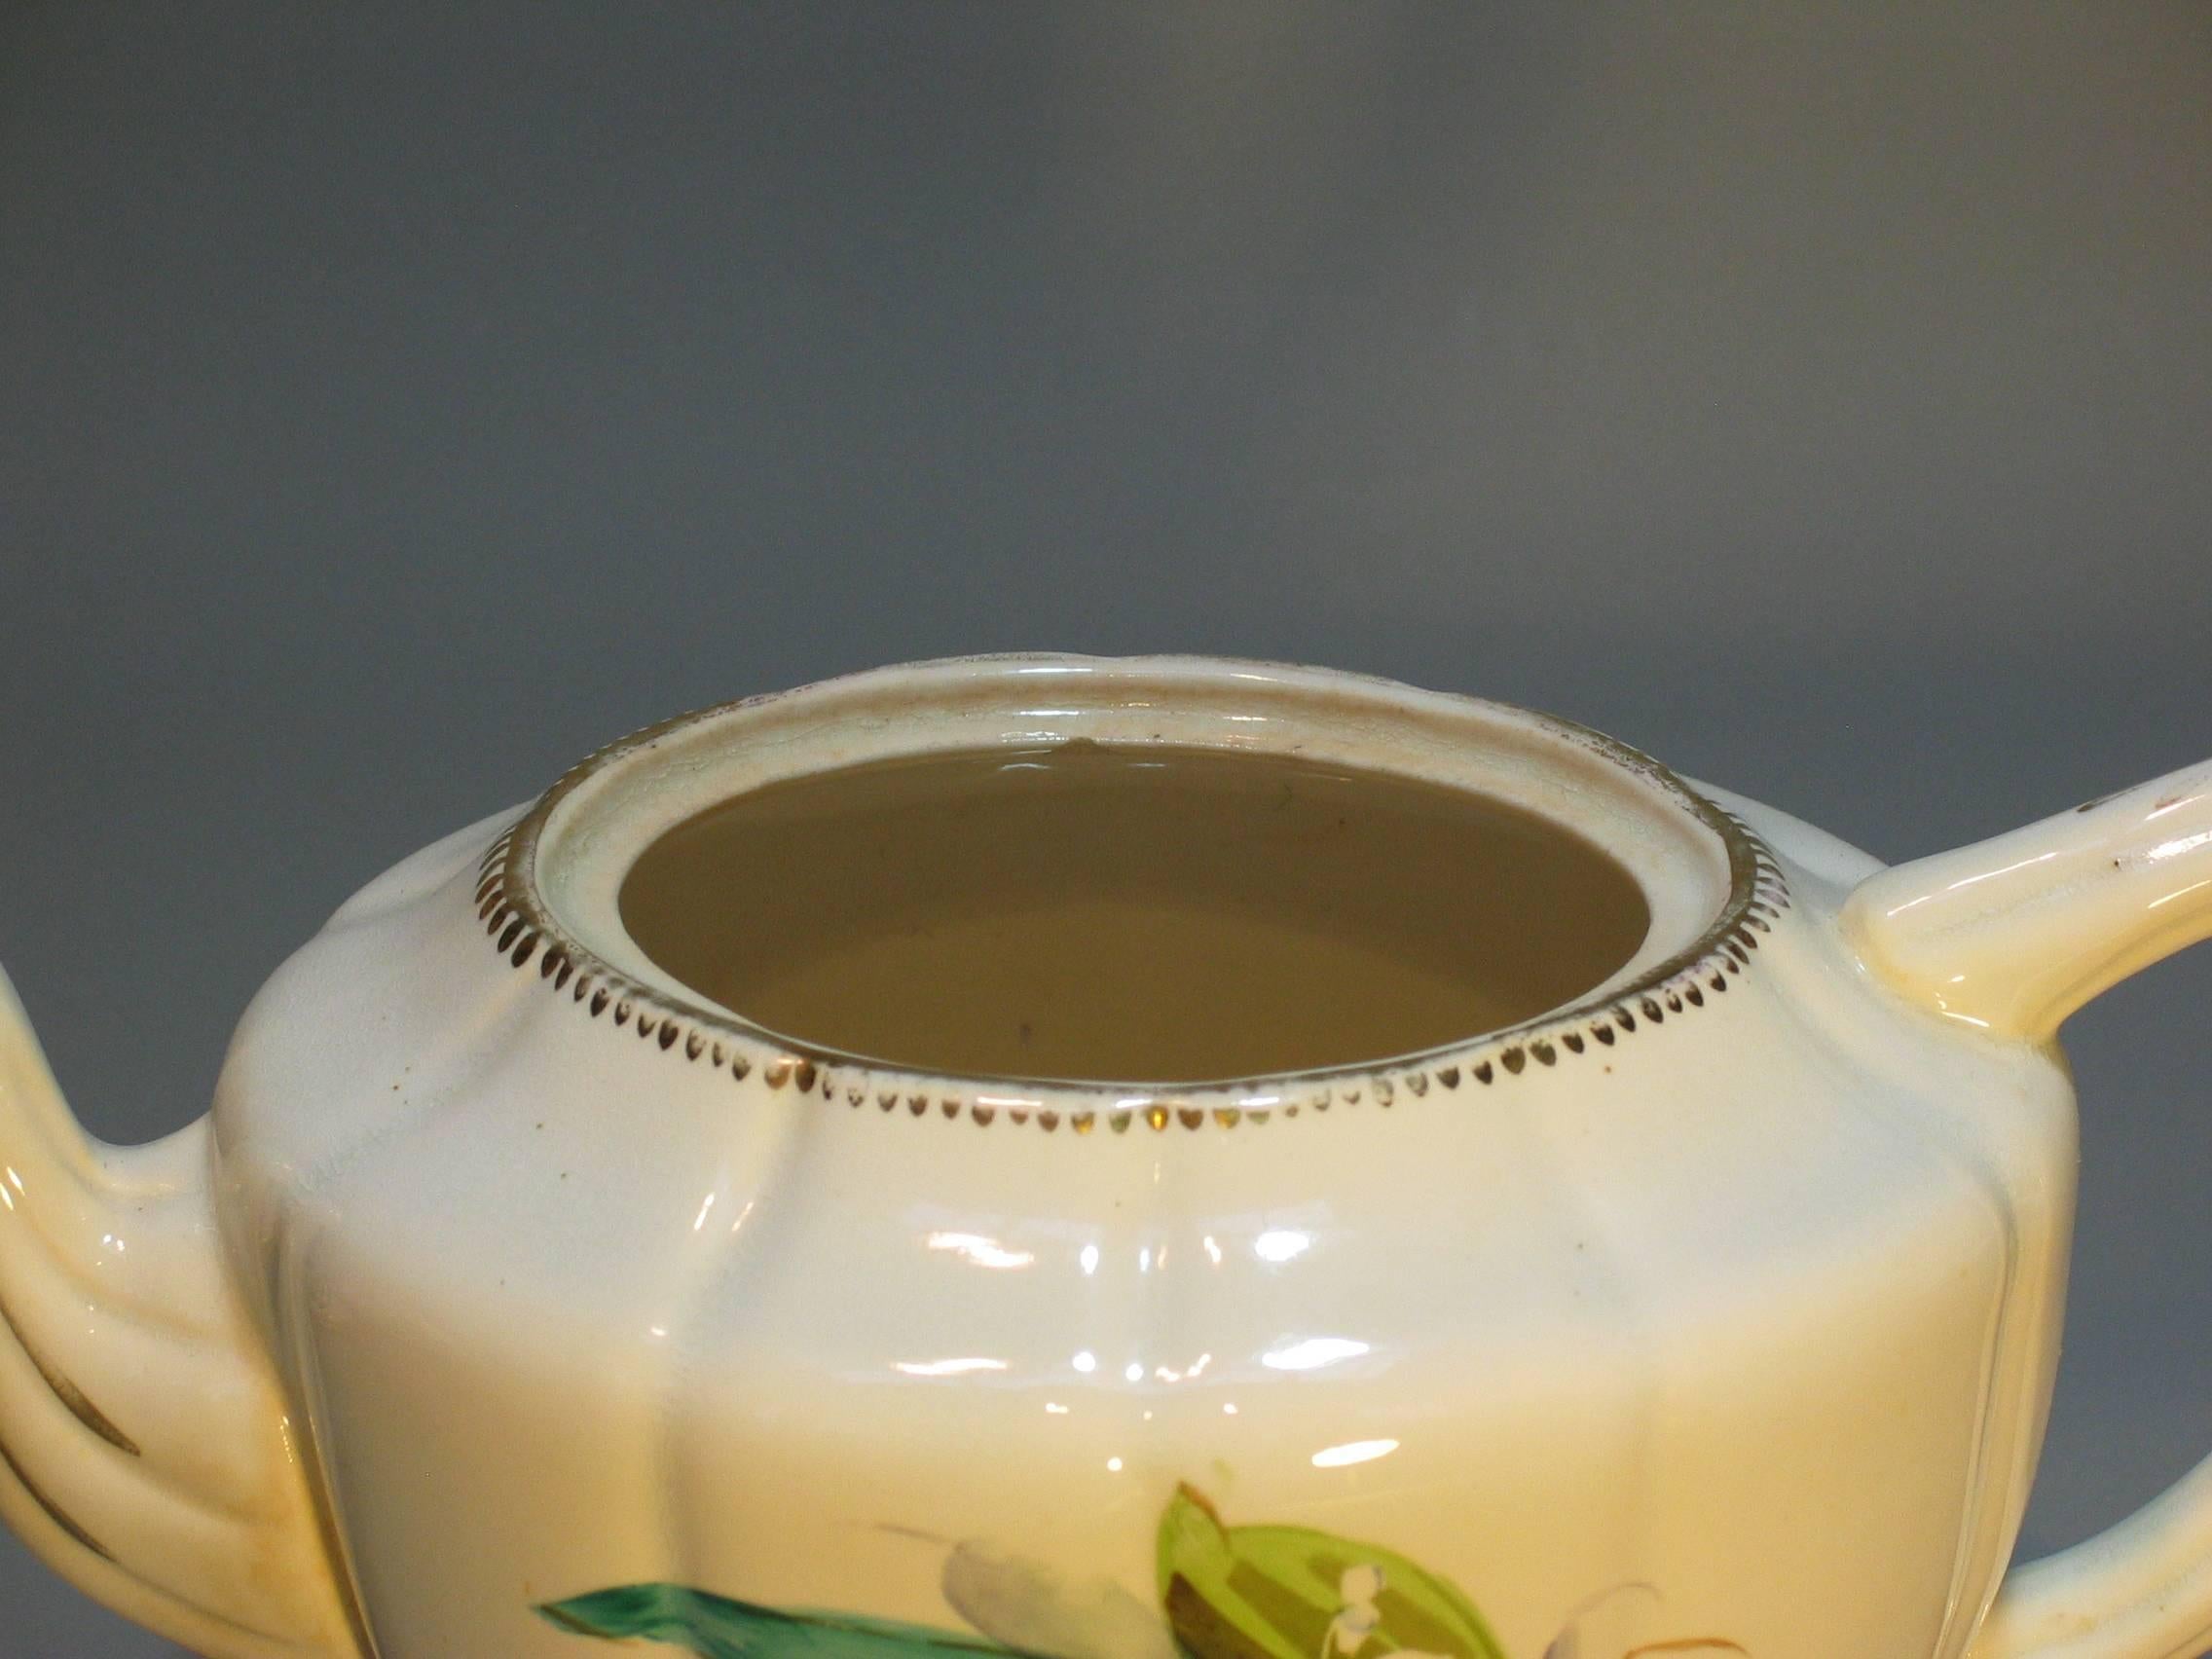 Glazed Staffordshire Porcelain Part Tea and Dessert Service, First Half of 19th Century